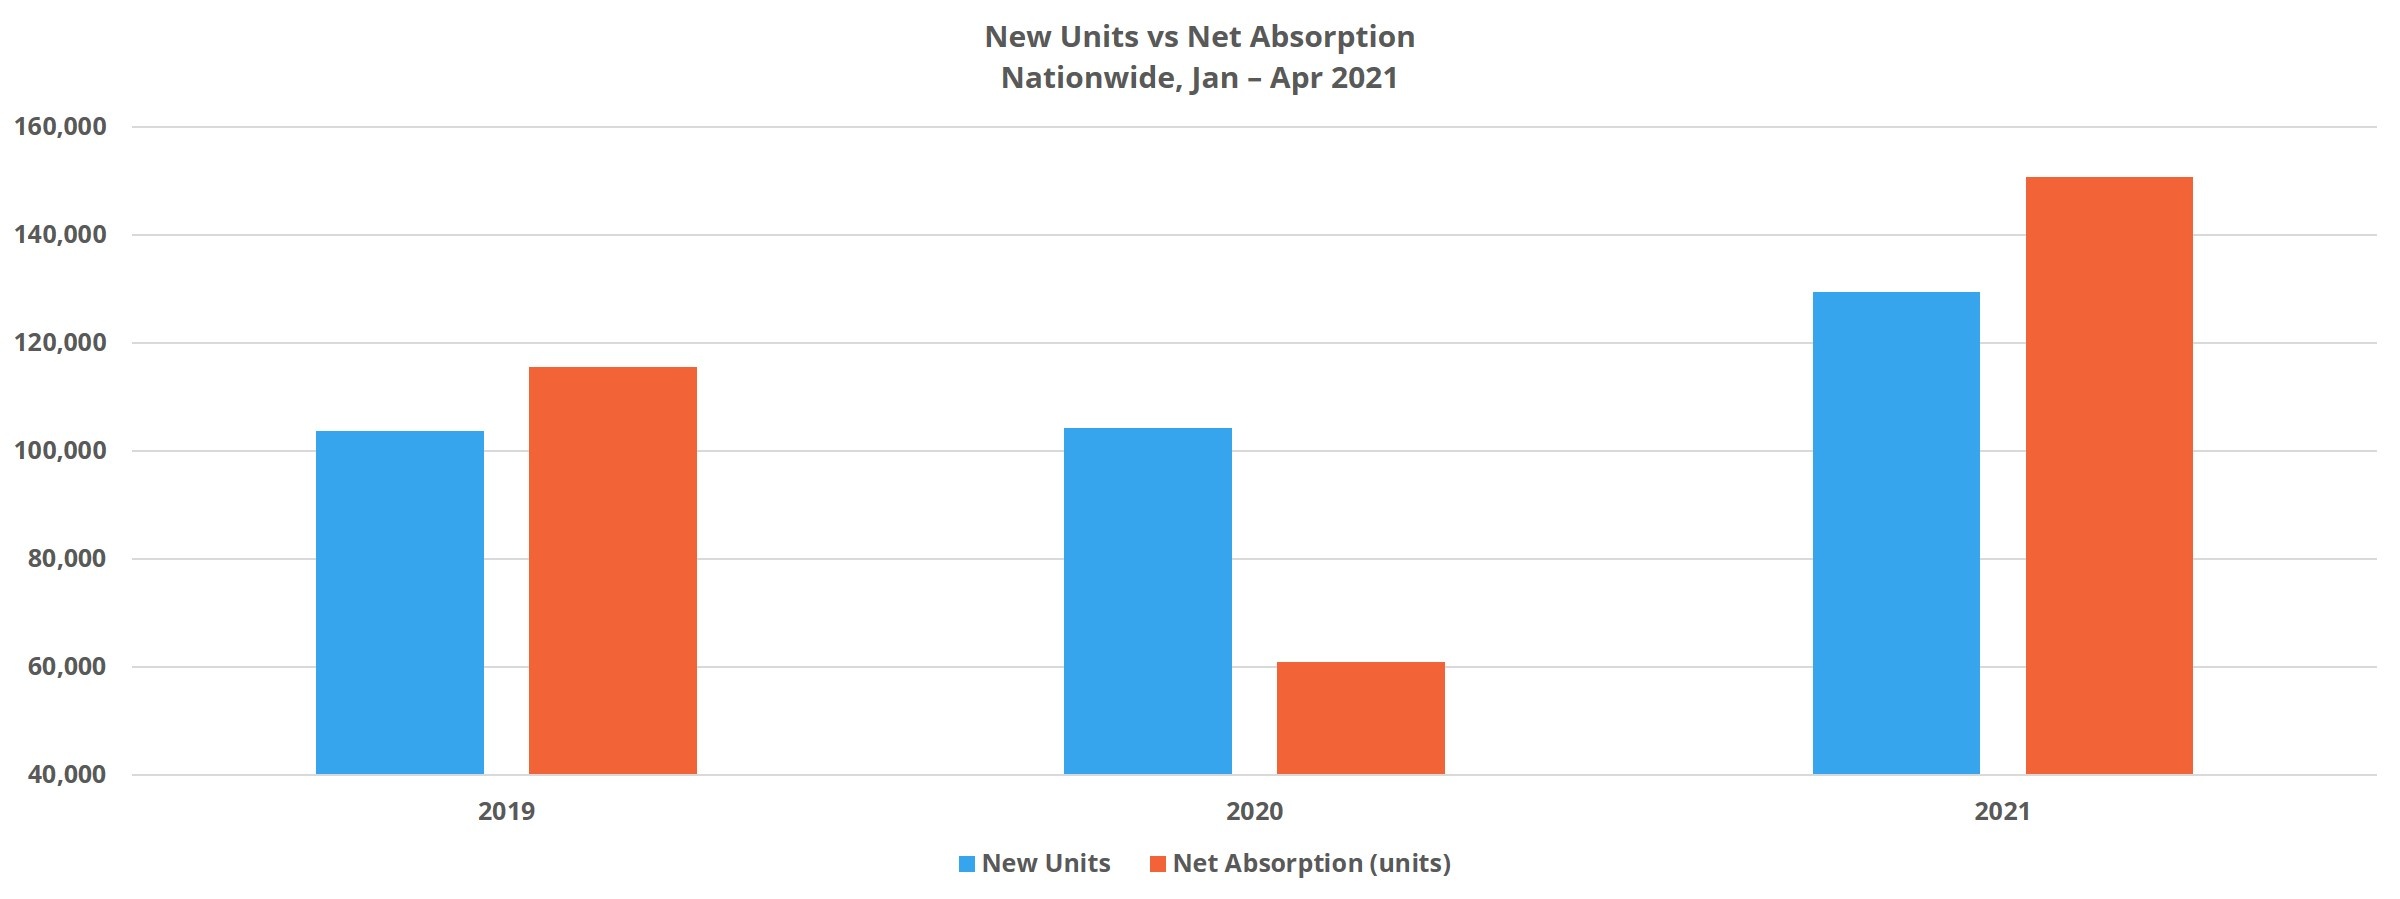 New Supply vs Net Absorption